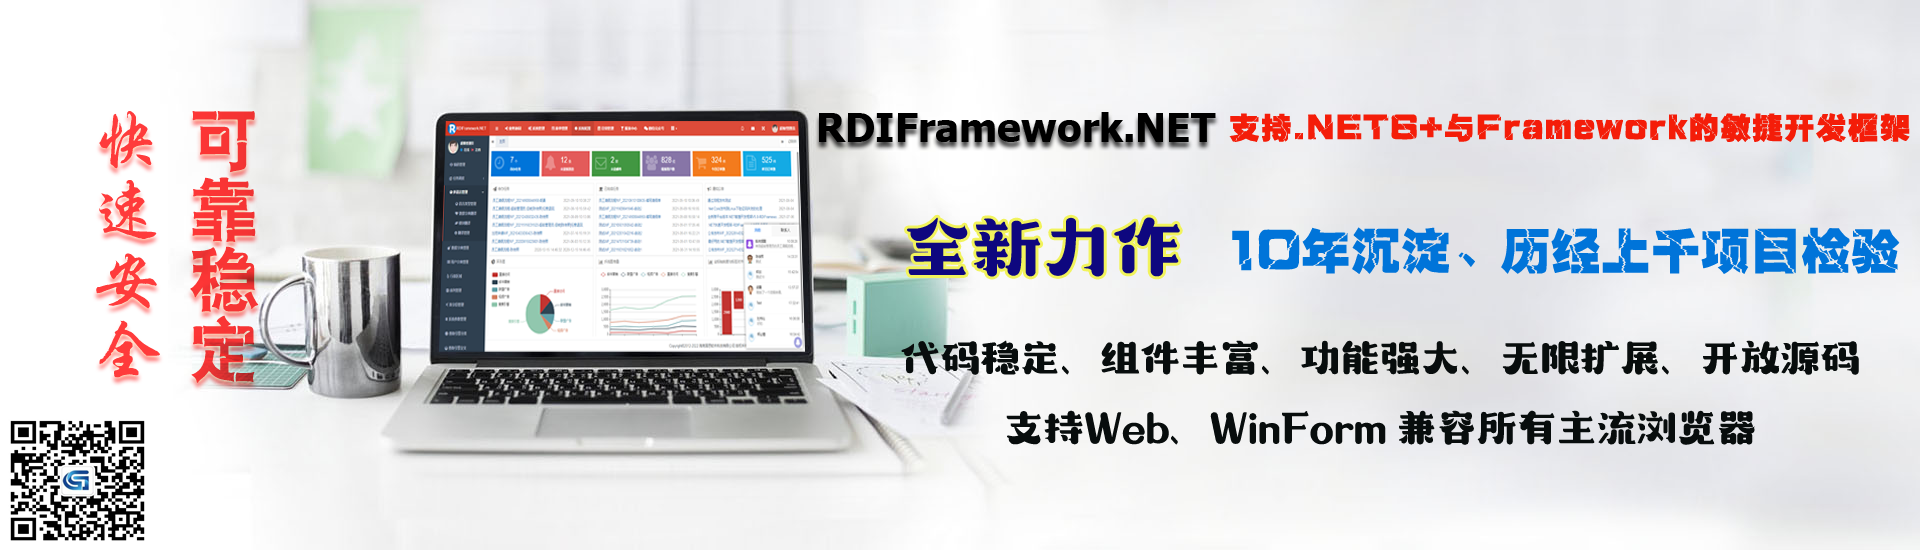 .NET敏捷开发框架-RDIFramework.NET V6.0发布